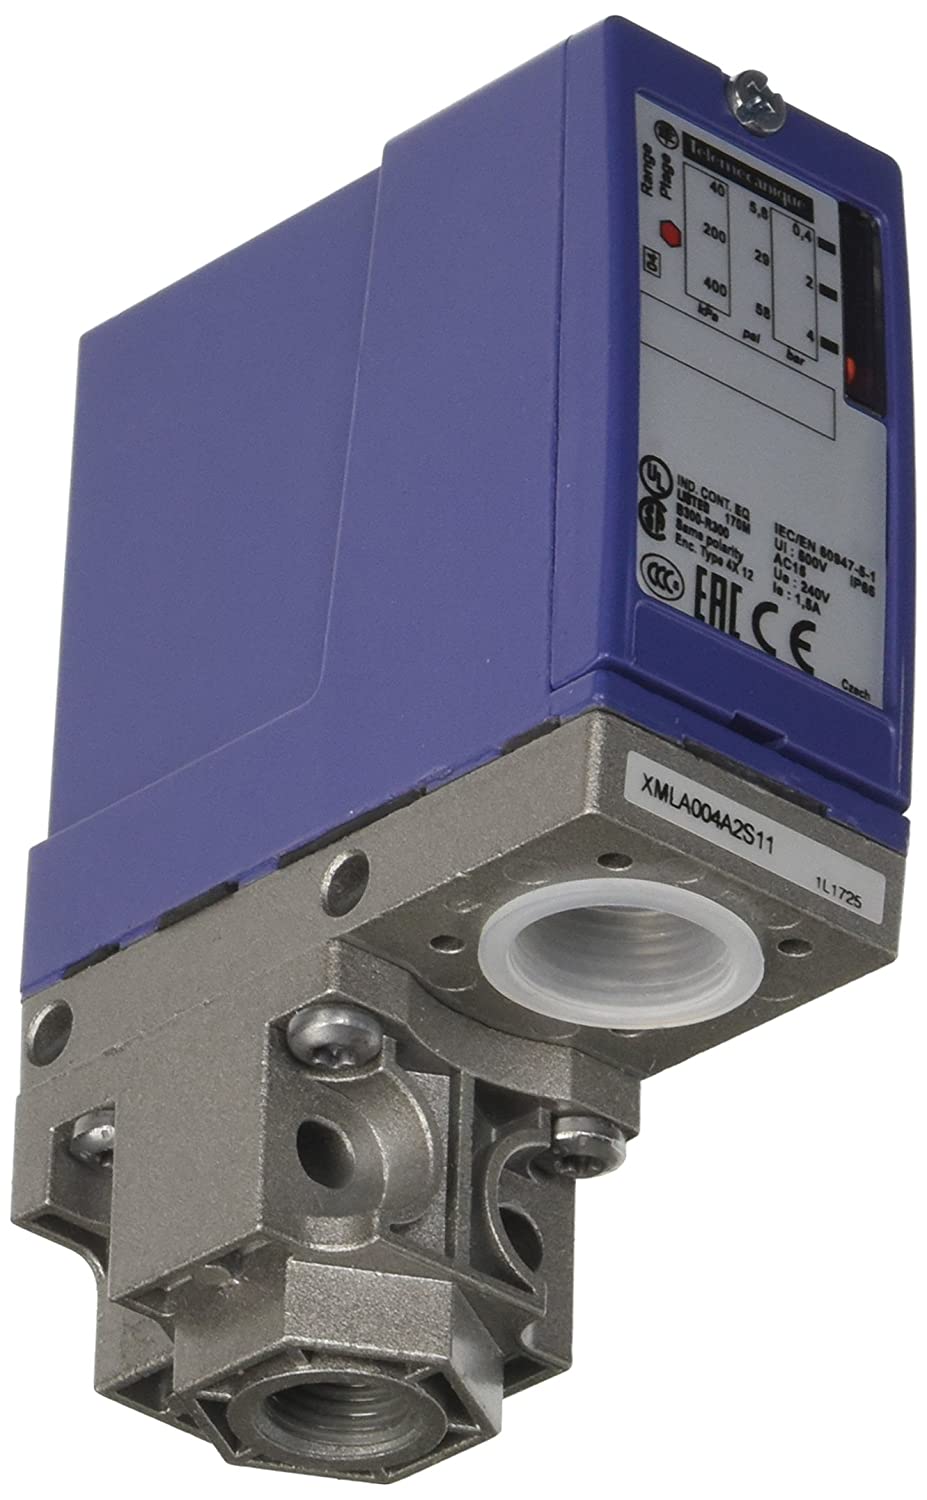 XMLA004A2S11 Pressure Sensor